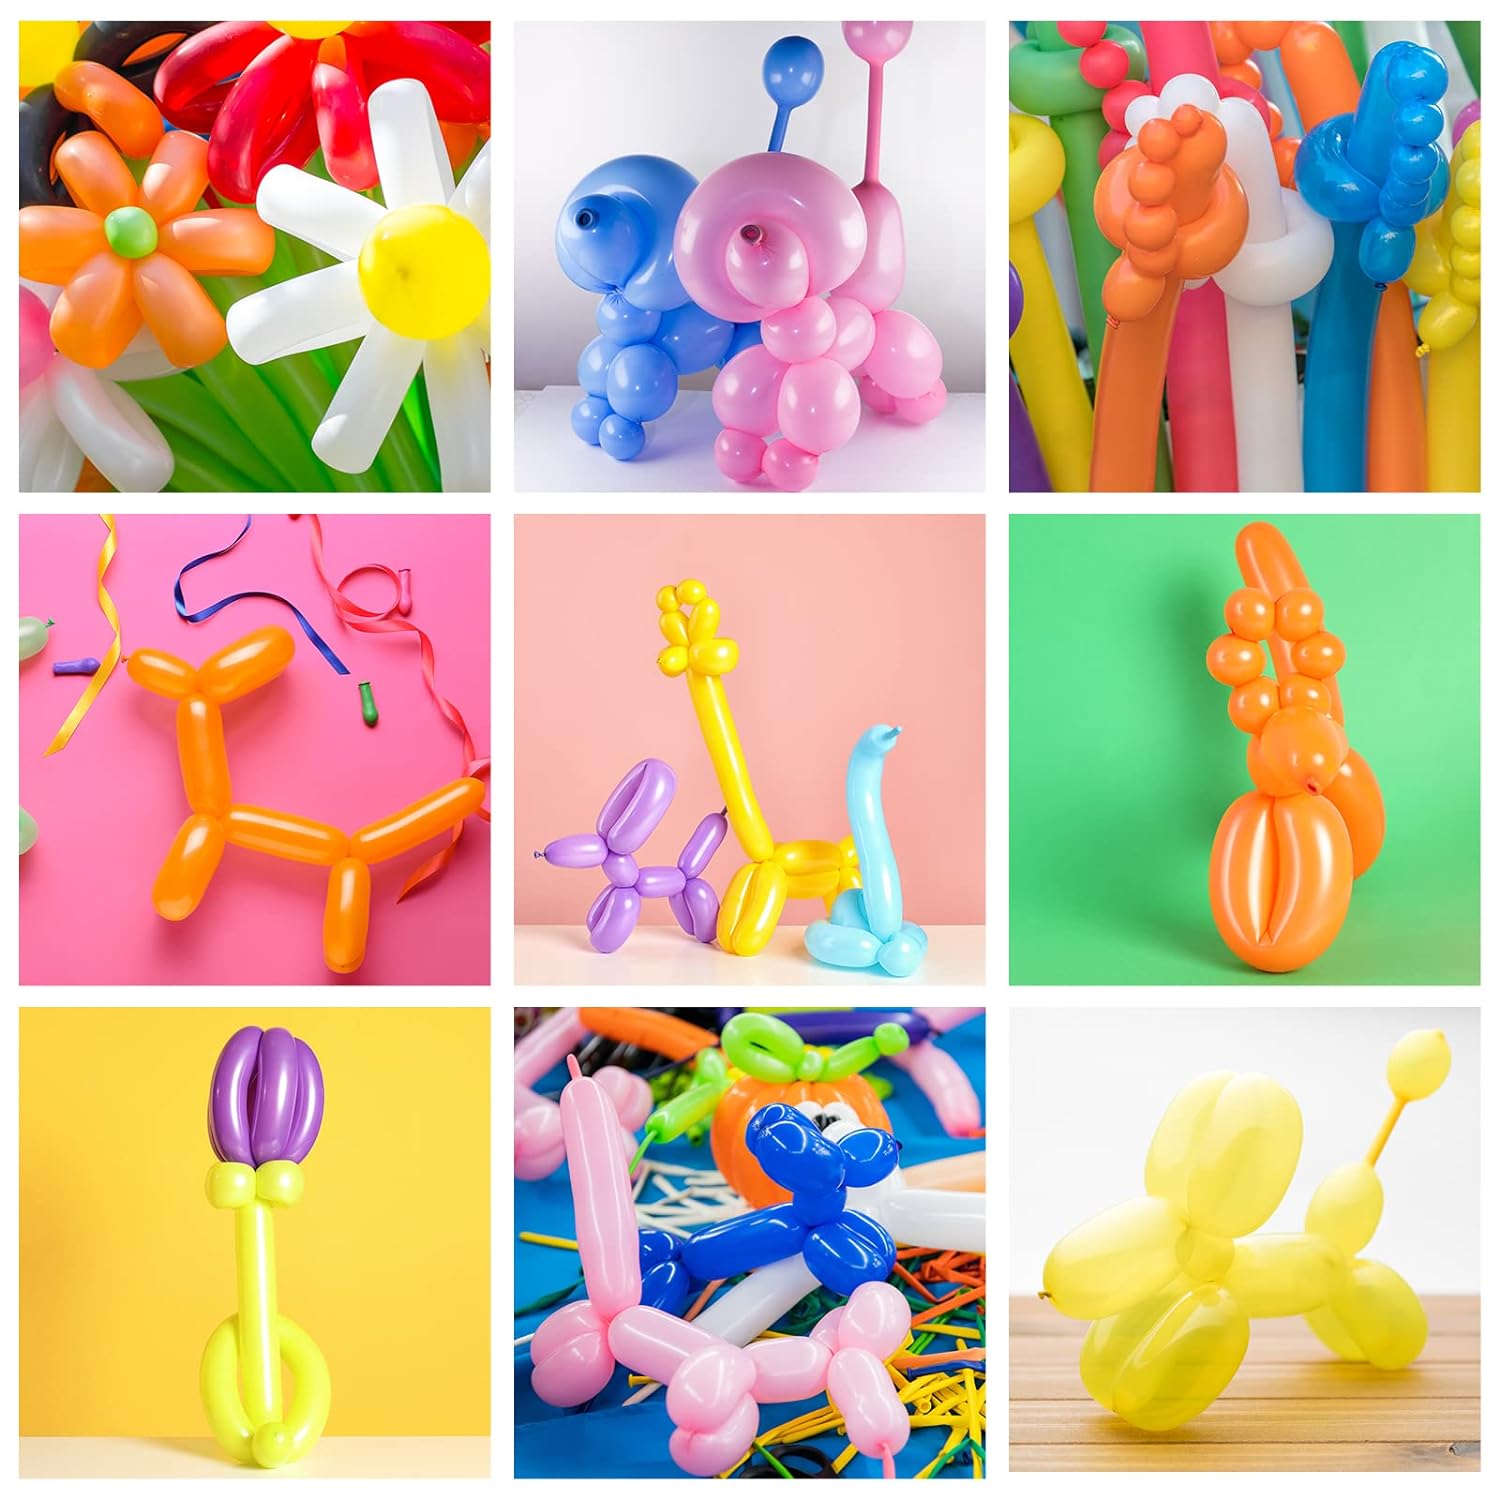 thinkstar 260 Balloons, 450Pcs Colorful Long Balloons With Pump, Premium Twisting Balloons Animals Magic Balloons For Birthday Wed…